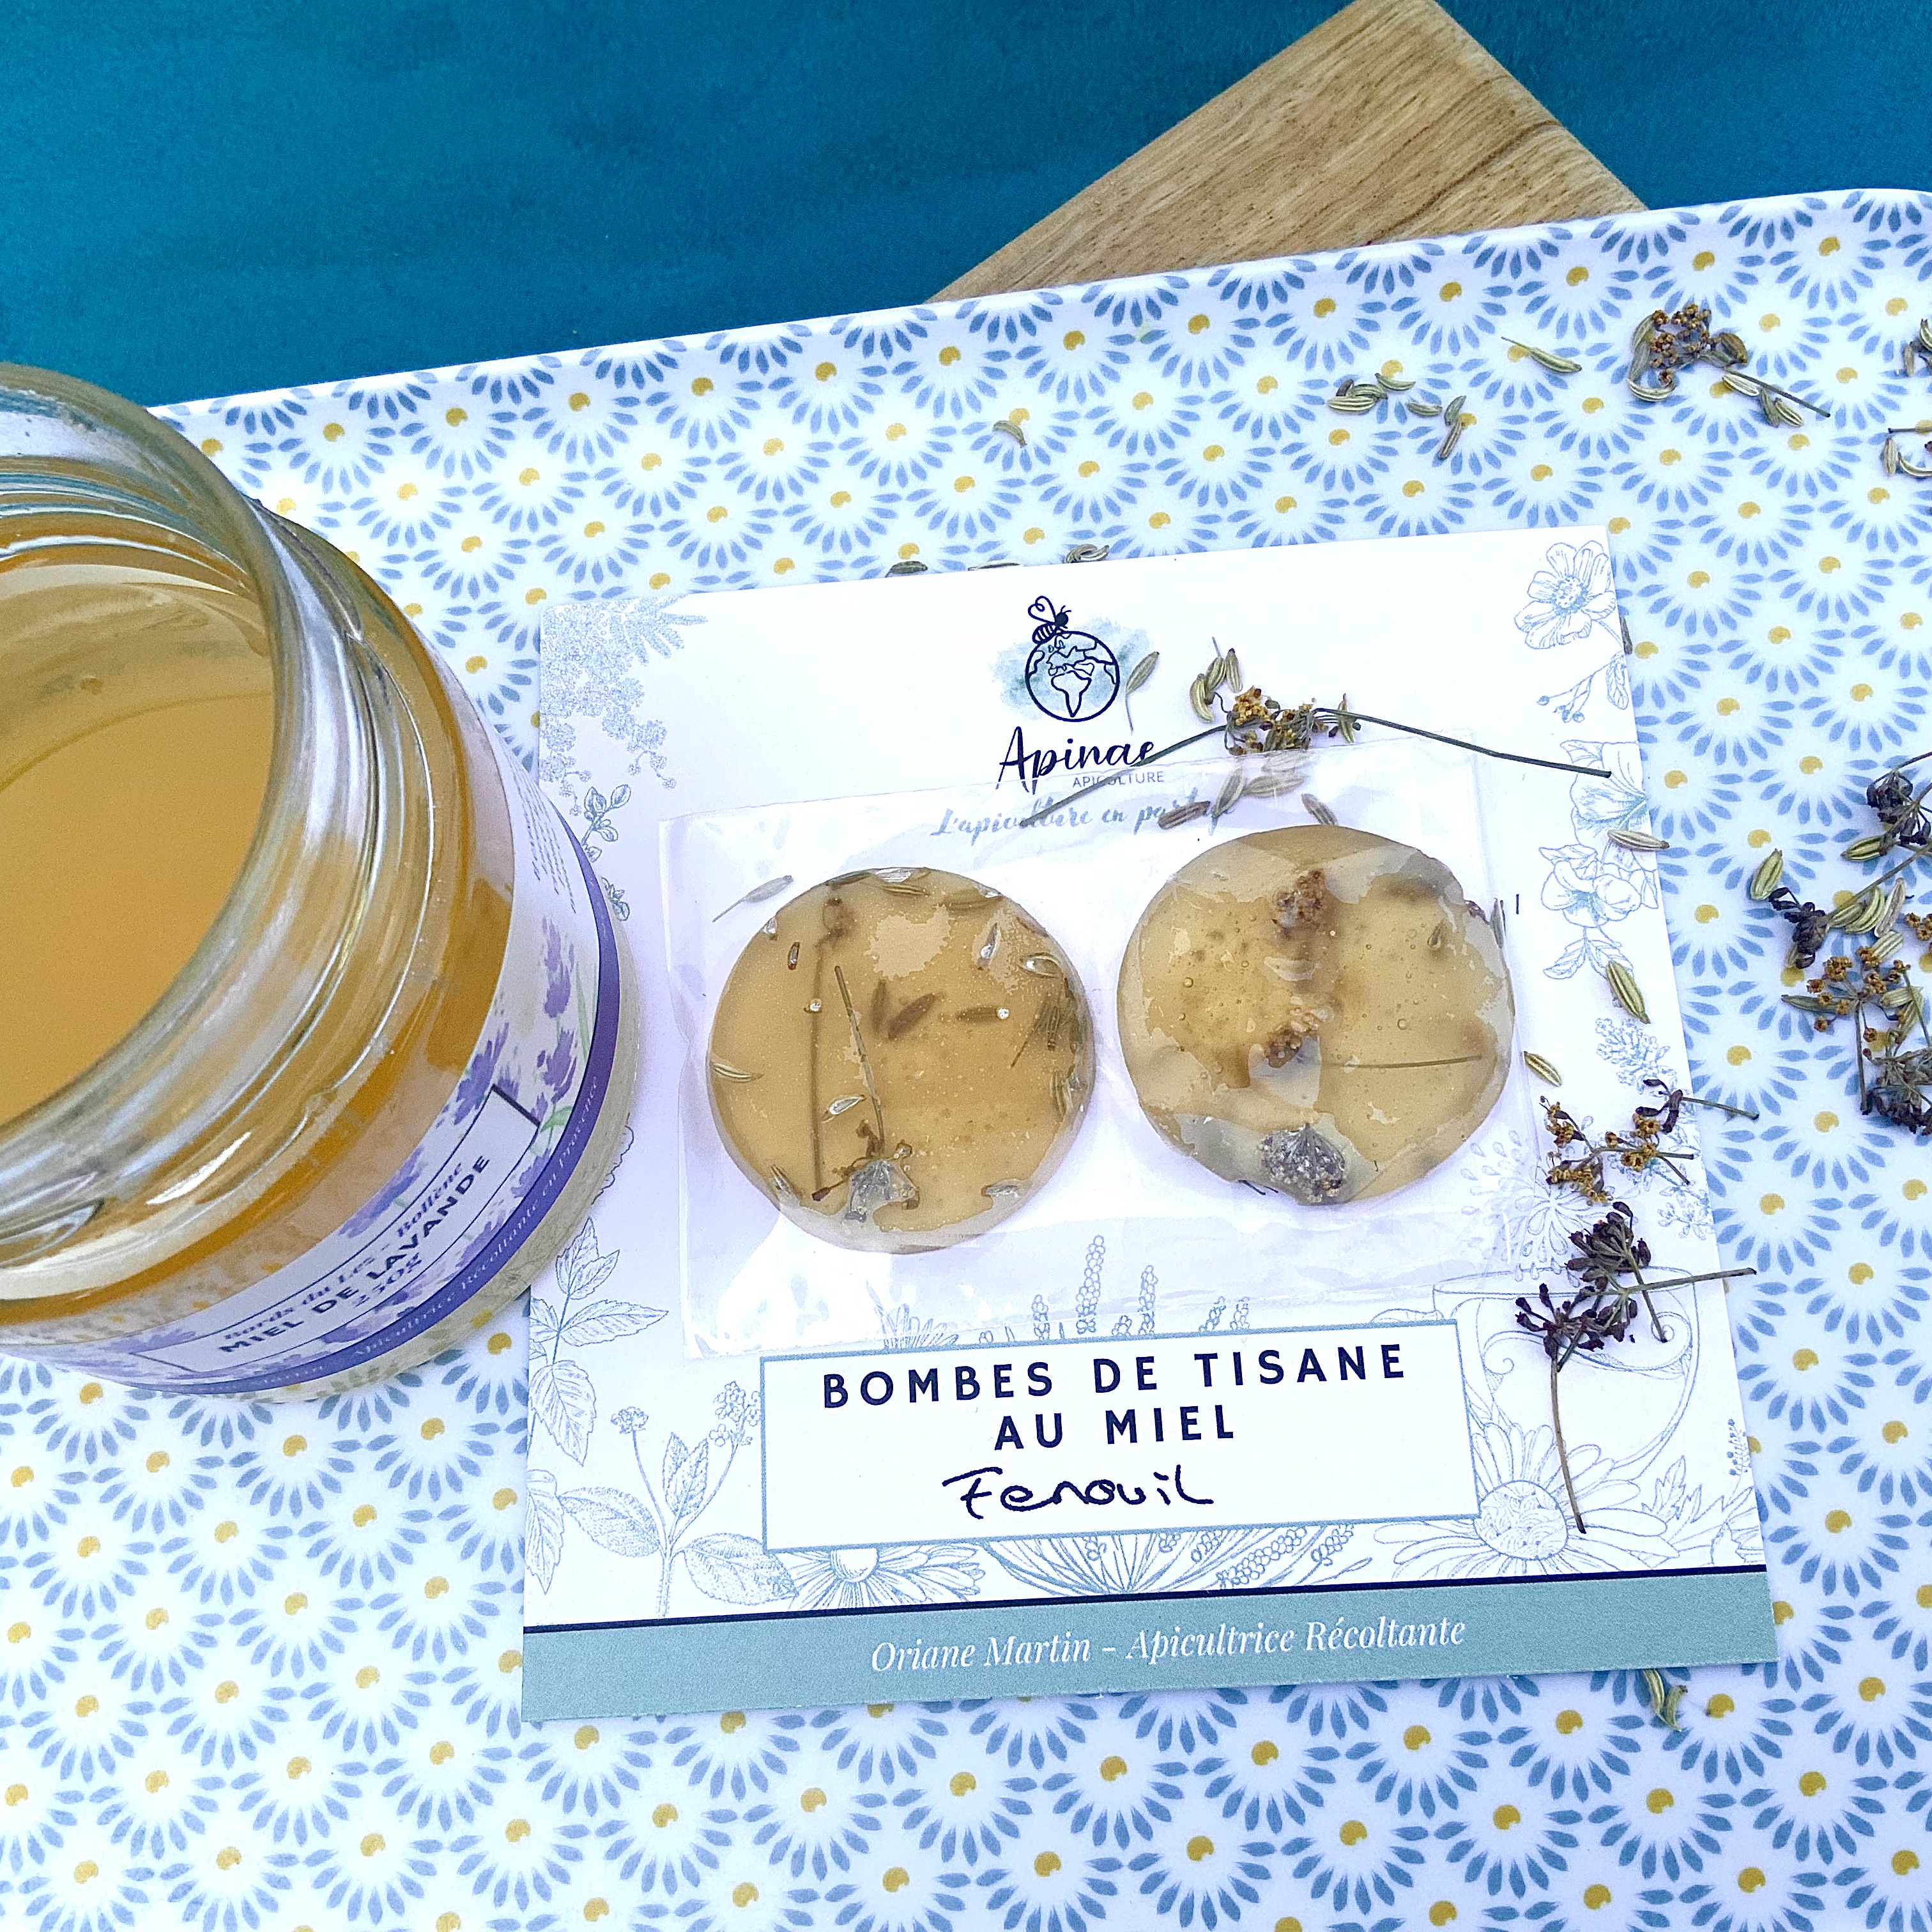 Bombes de tisane au miel - Fenouil